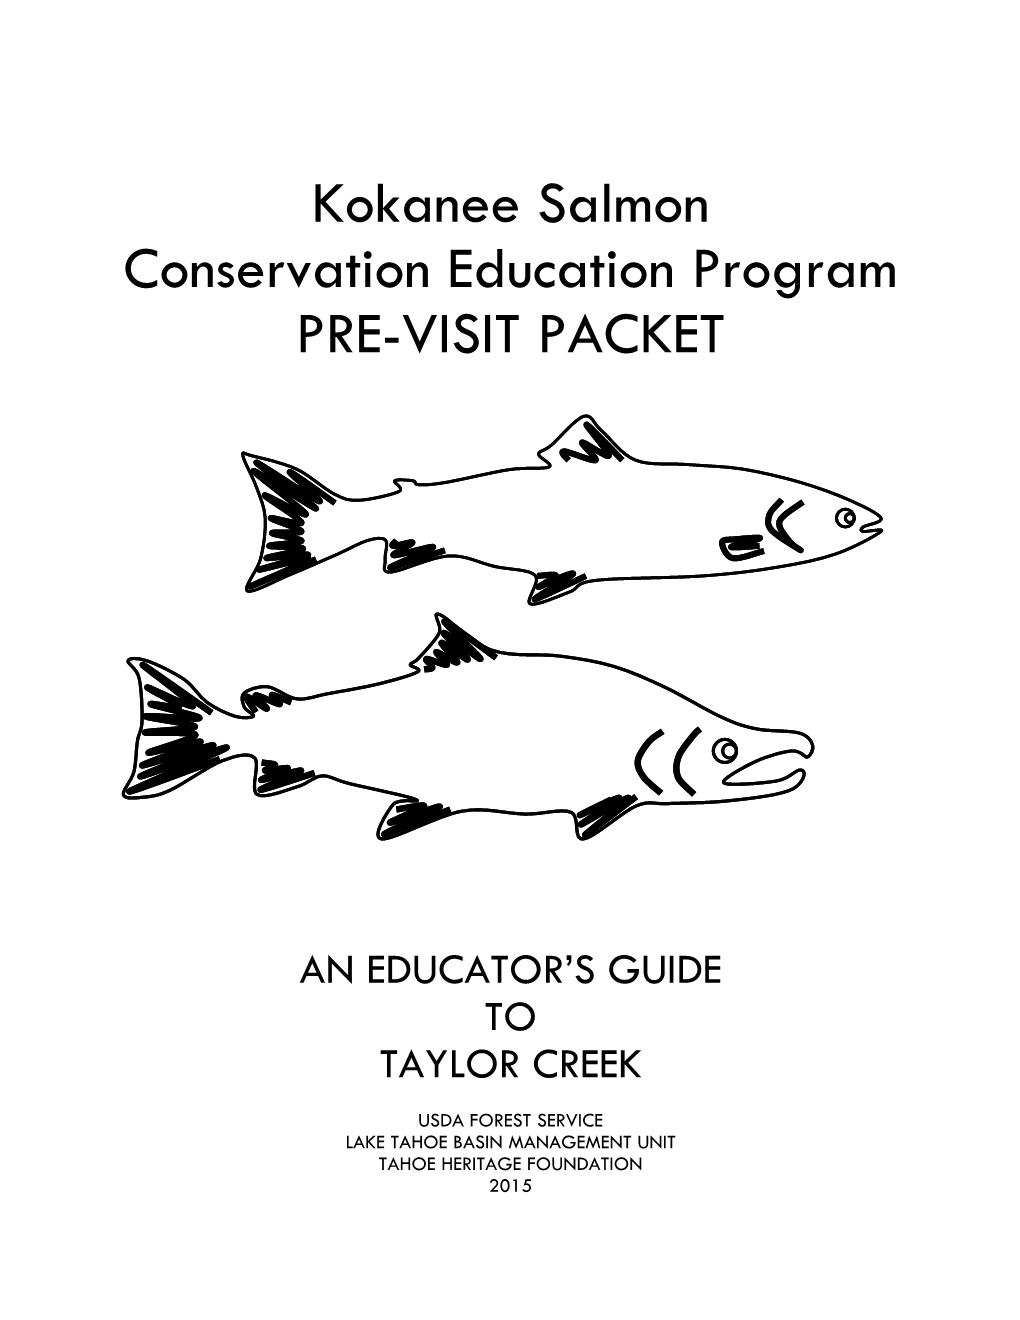 Kokanee Salmon Conservation Education Program PRE-VISIT PACKET